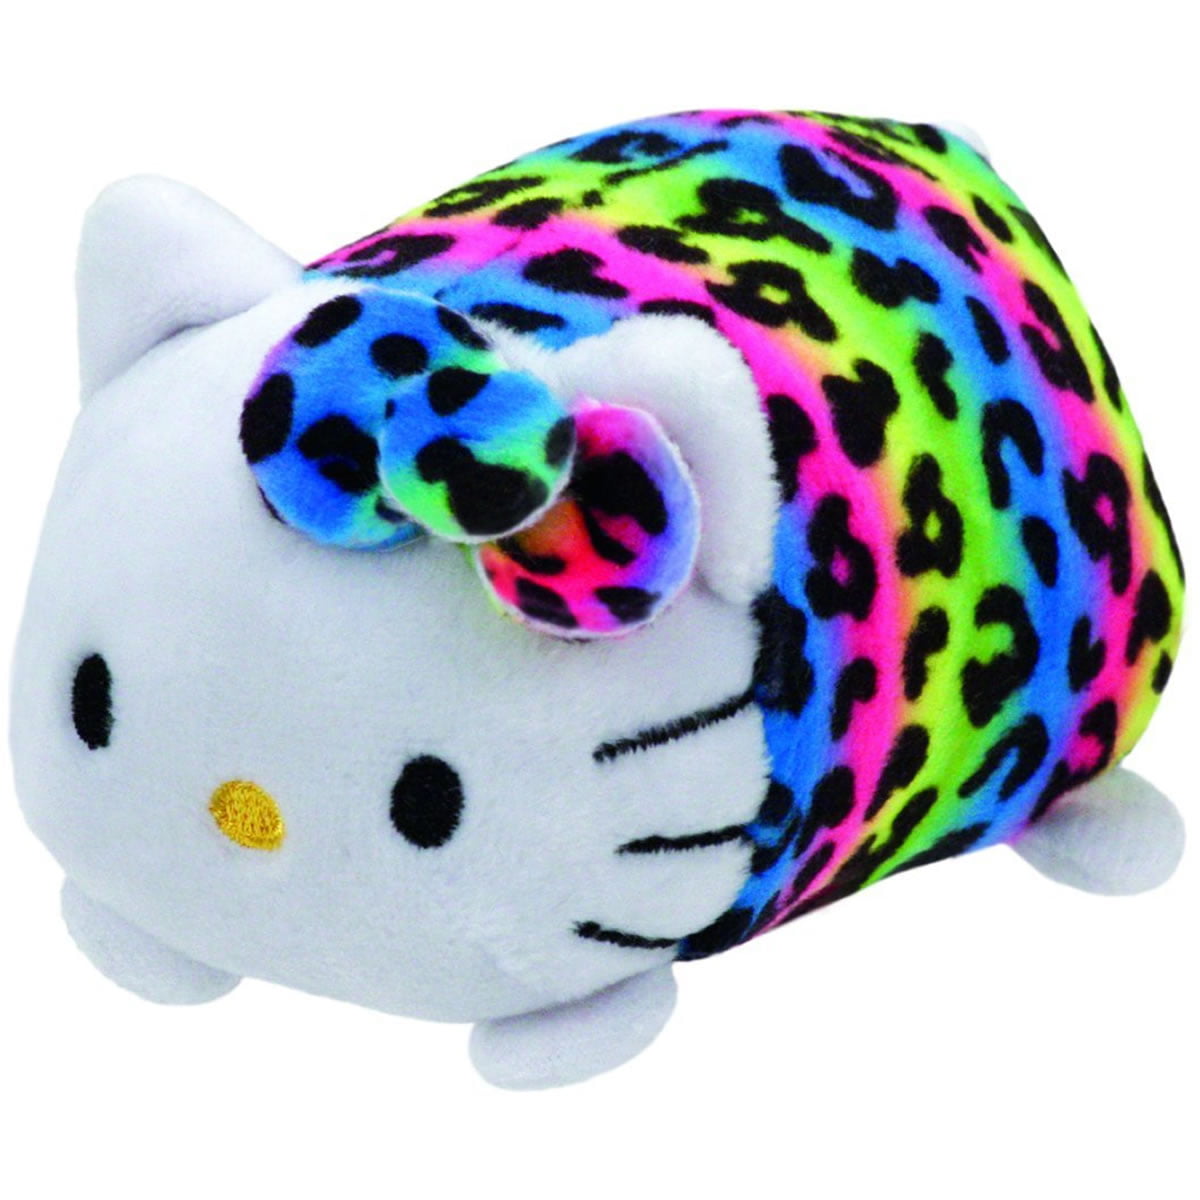 Ty Beanie Babies Hello Kitty 6” Rainbow Plush Doll New